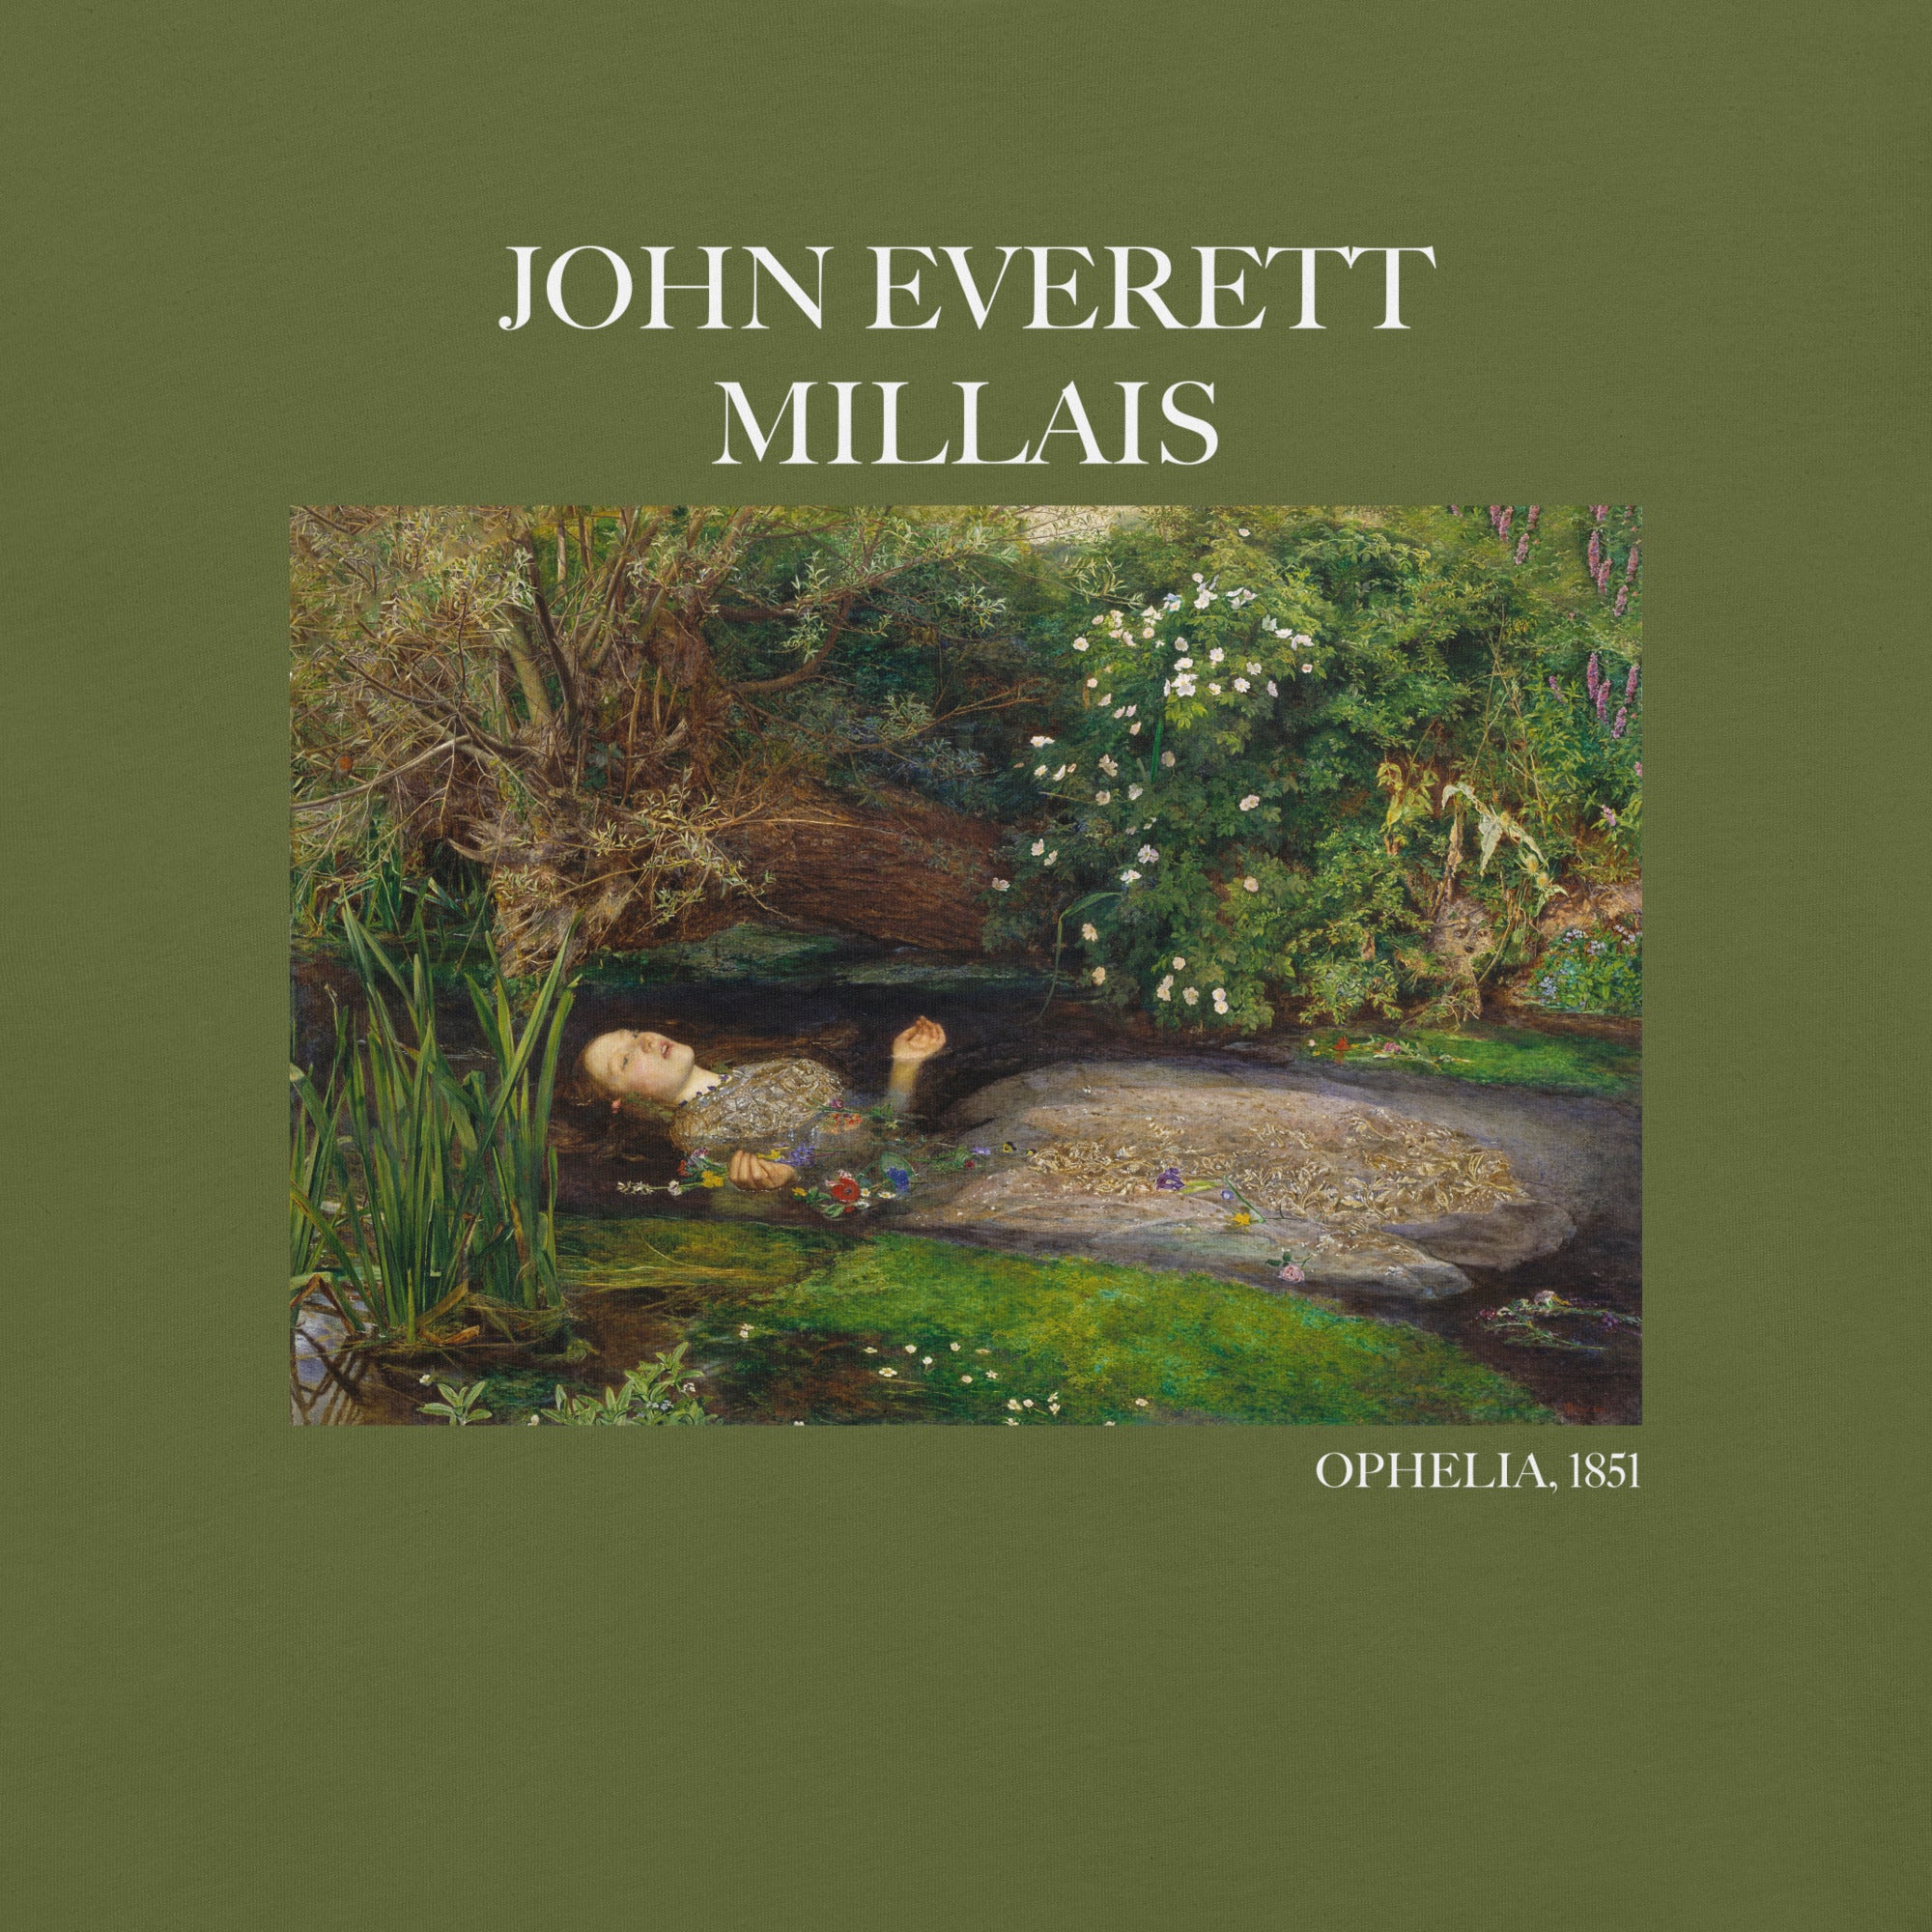 John Everett Millais 'Ophelia' Famous Painting T-Shirt | Unisex Classic Art Tee